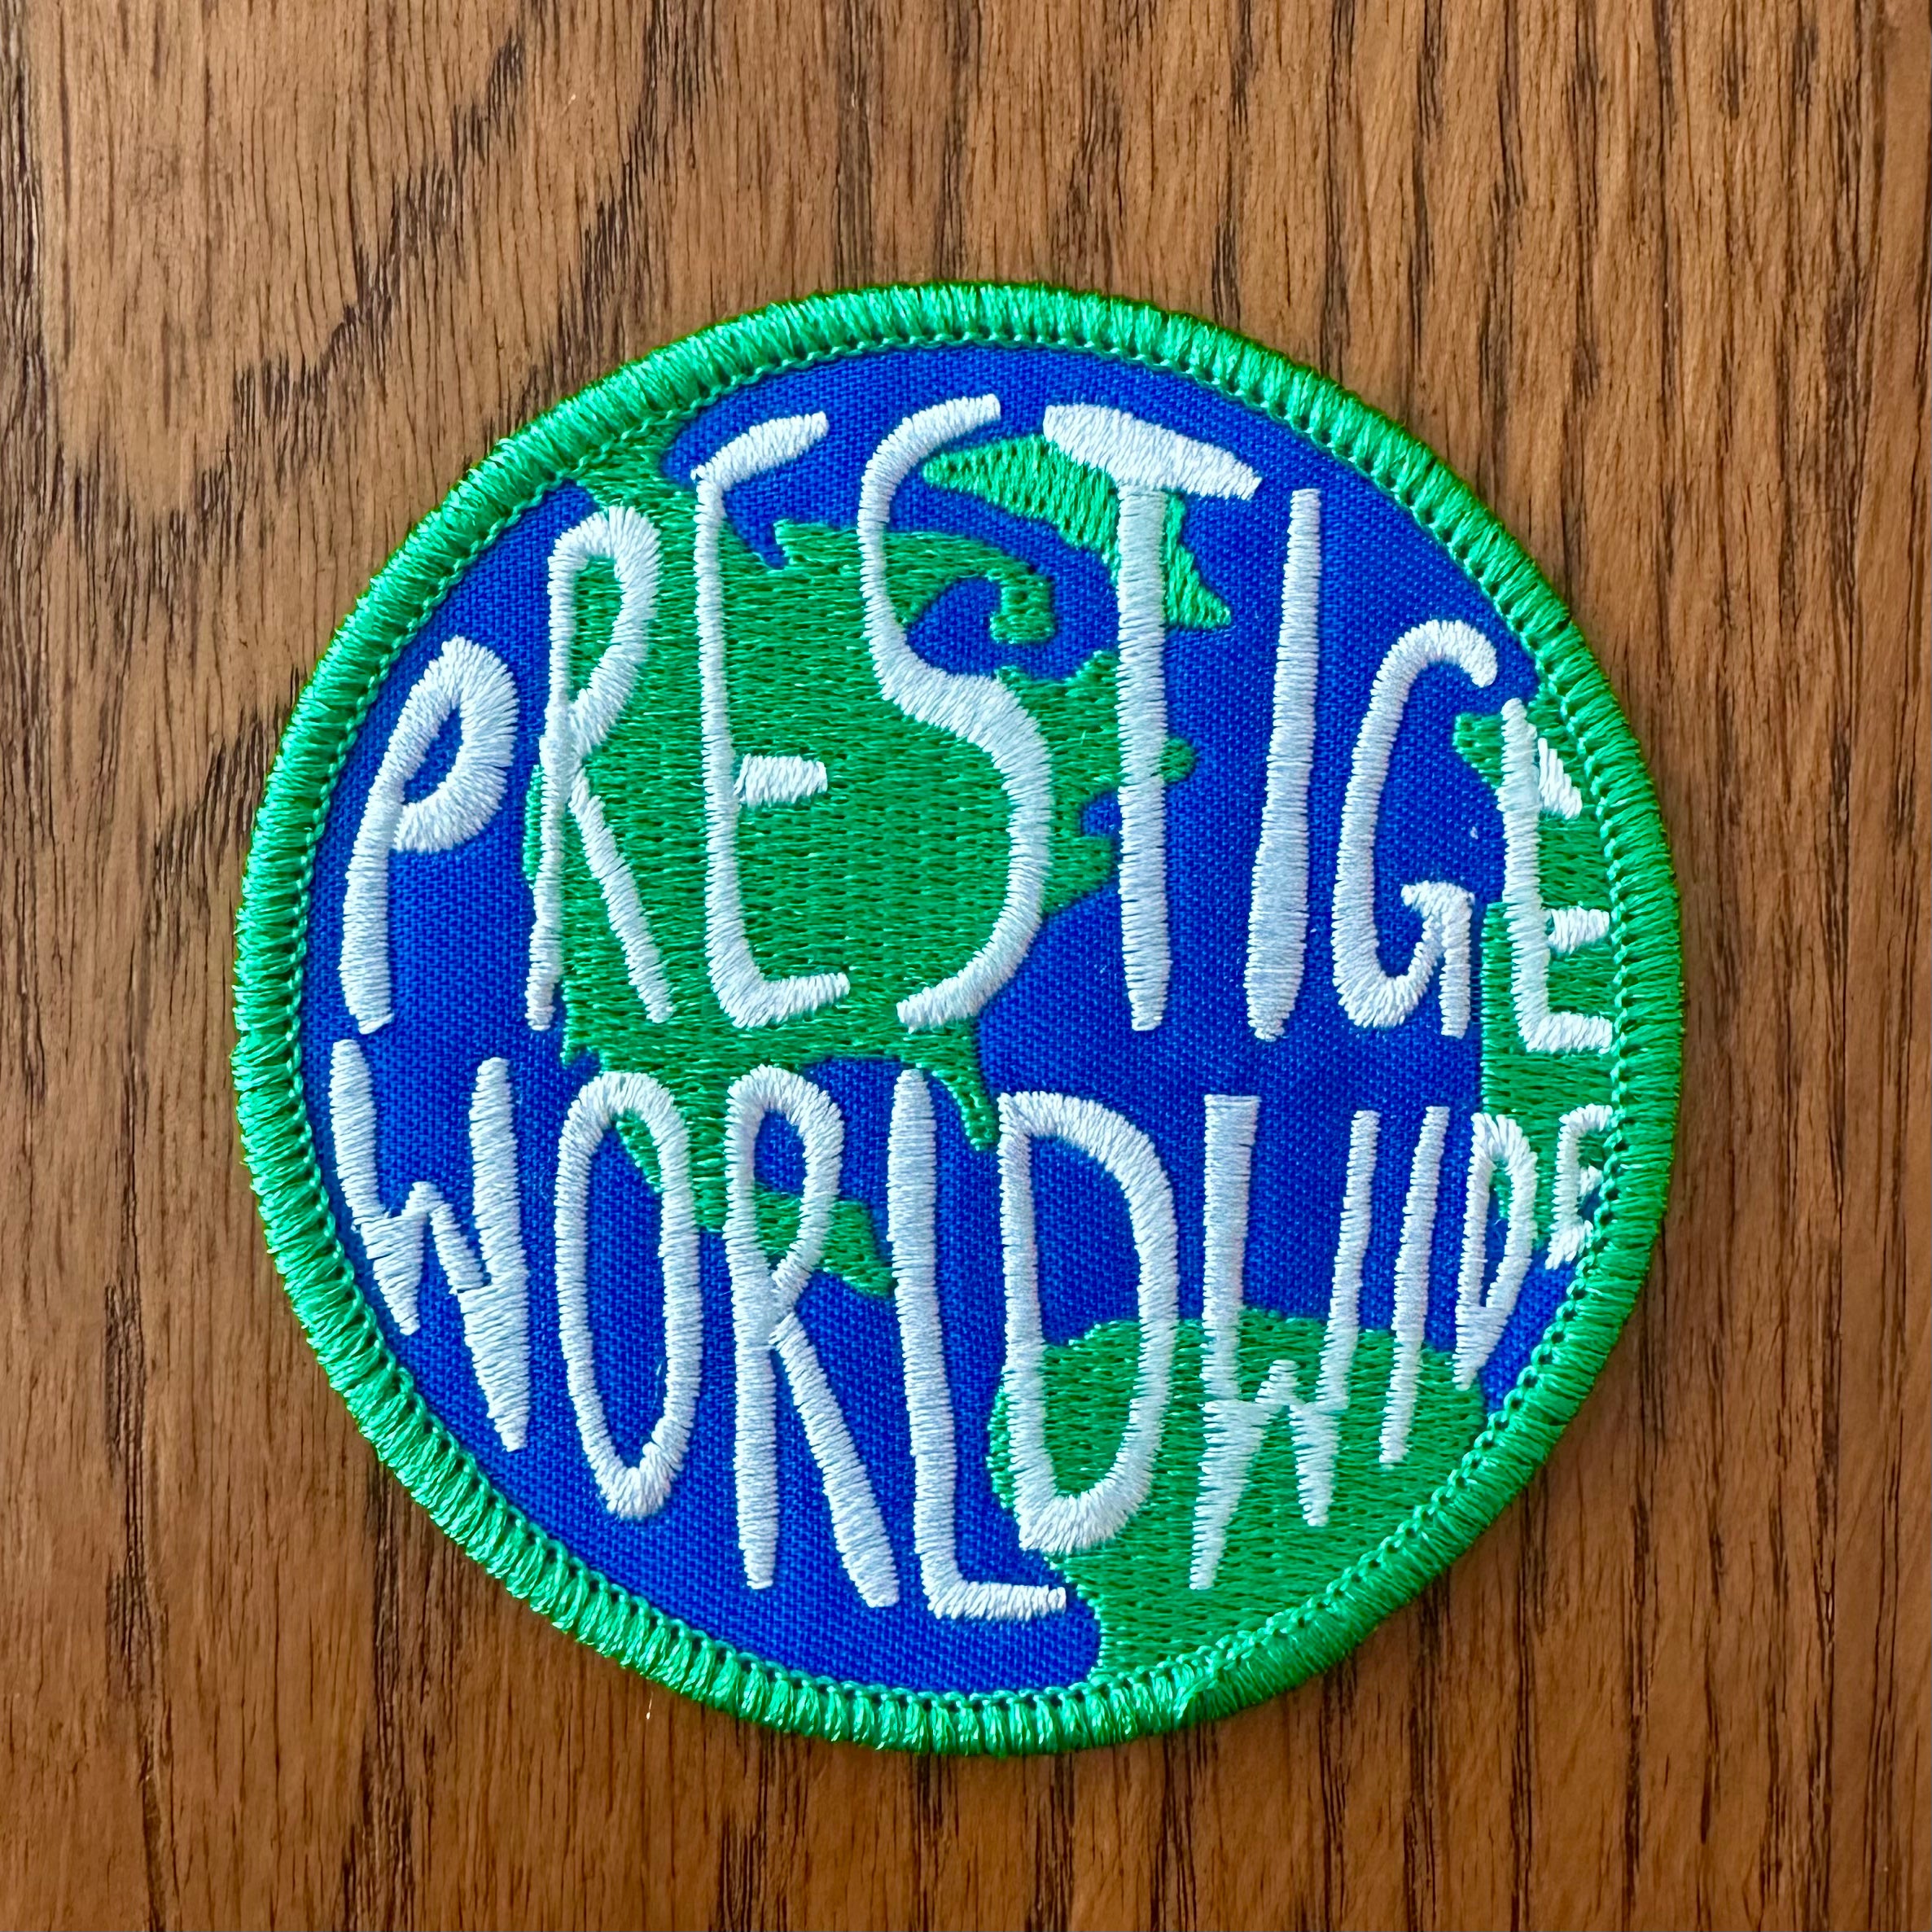 step brothers prestige worldwide